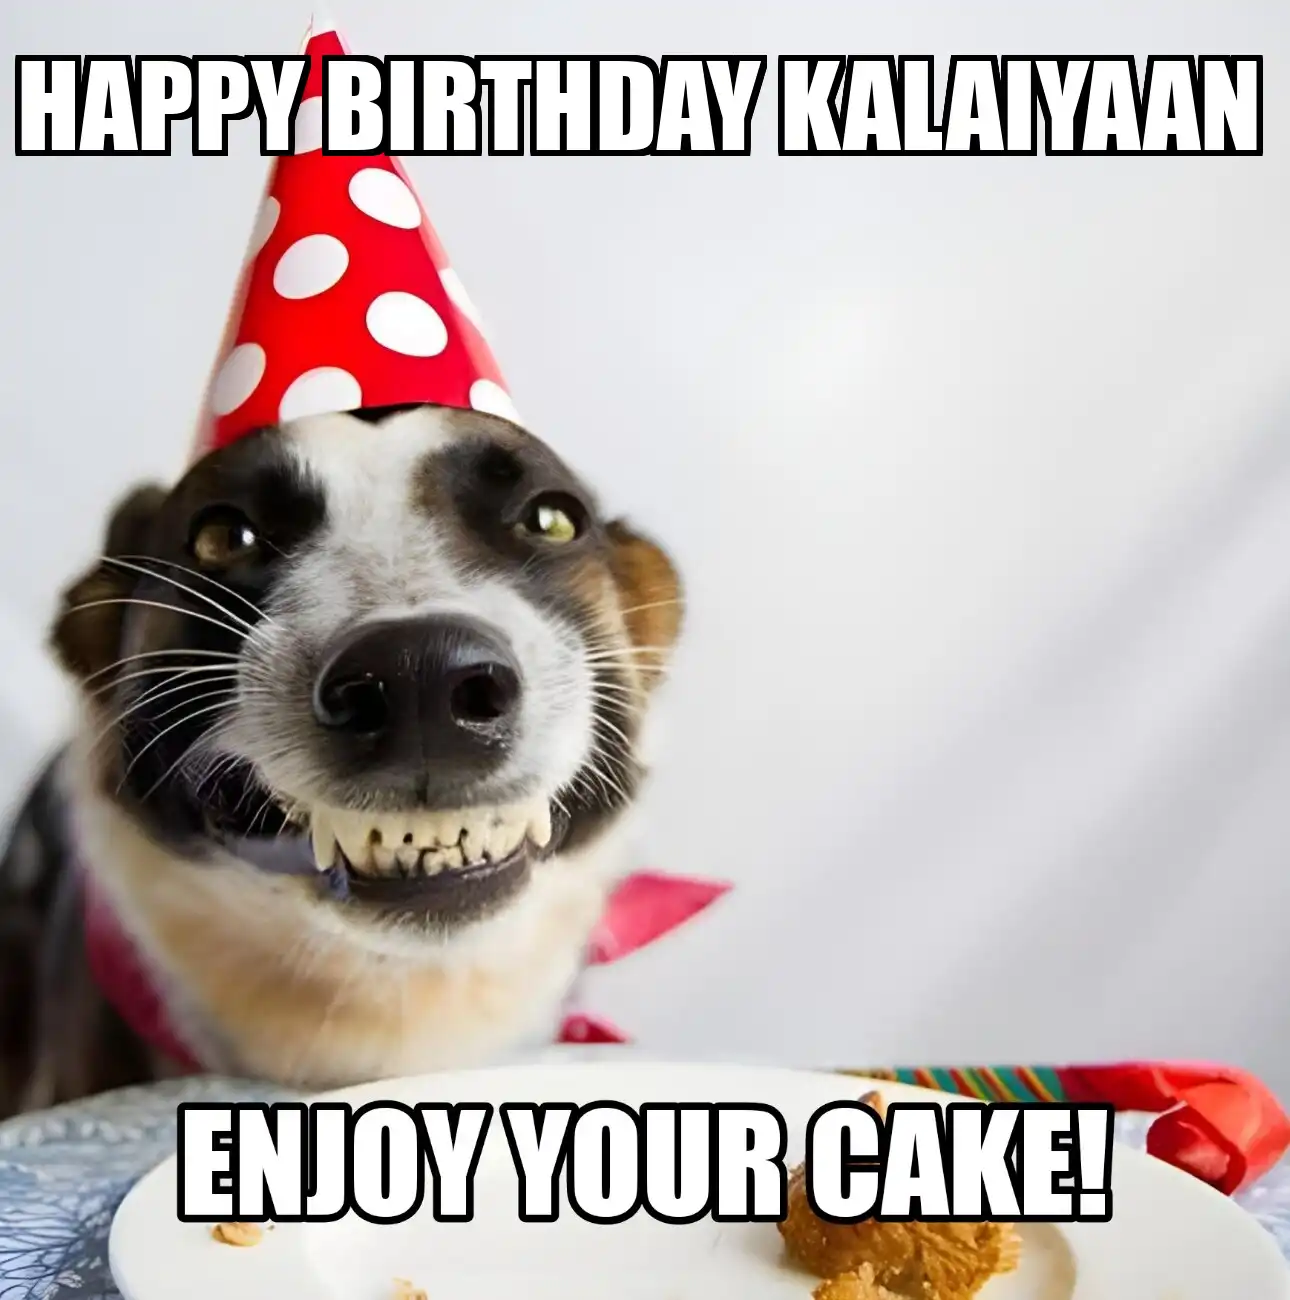 Happy Birthday Kalaiyaan Enjoy Your Cake Dog Meme